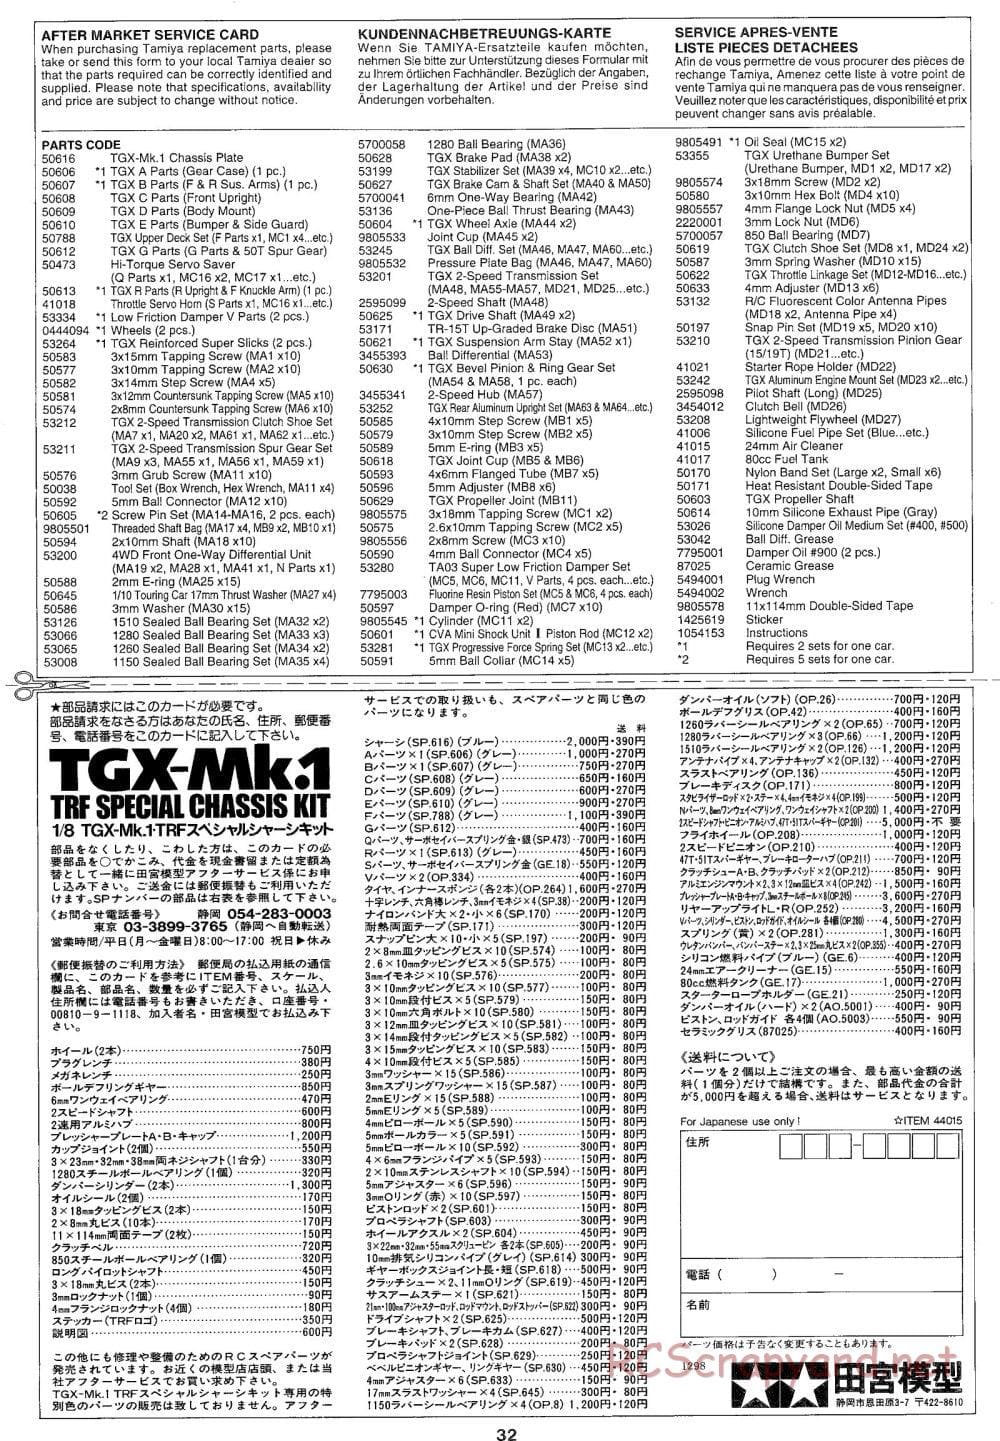 Tamiya - TGX Mk.1 TRF Special Chassis - Manual - Page 32